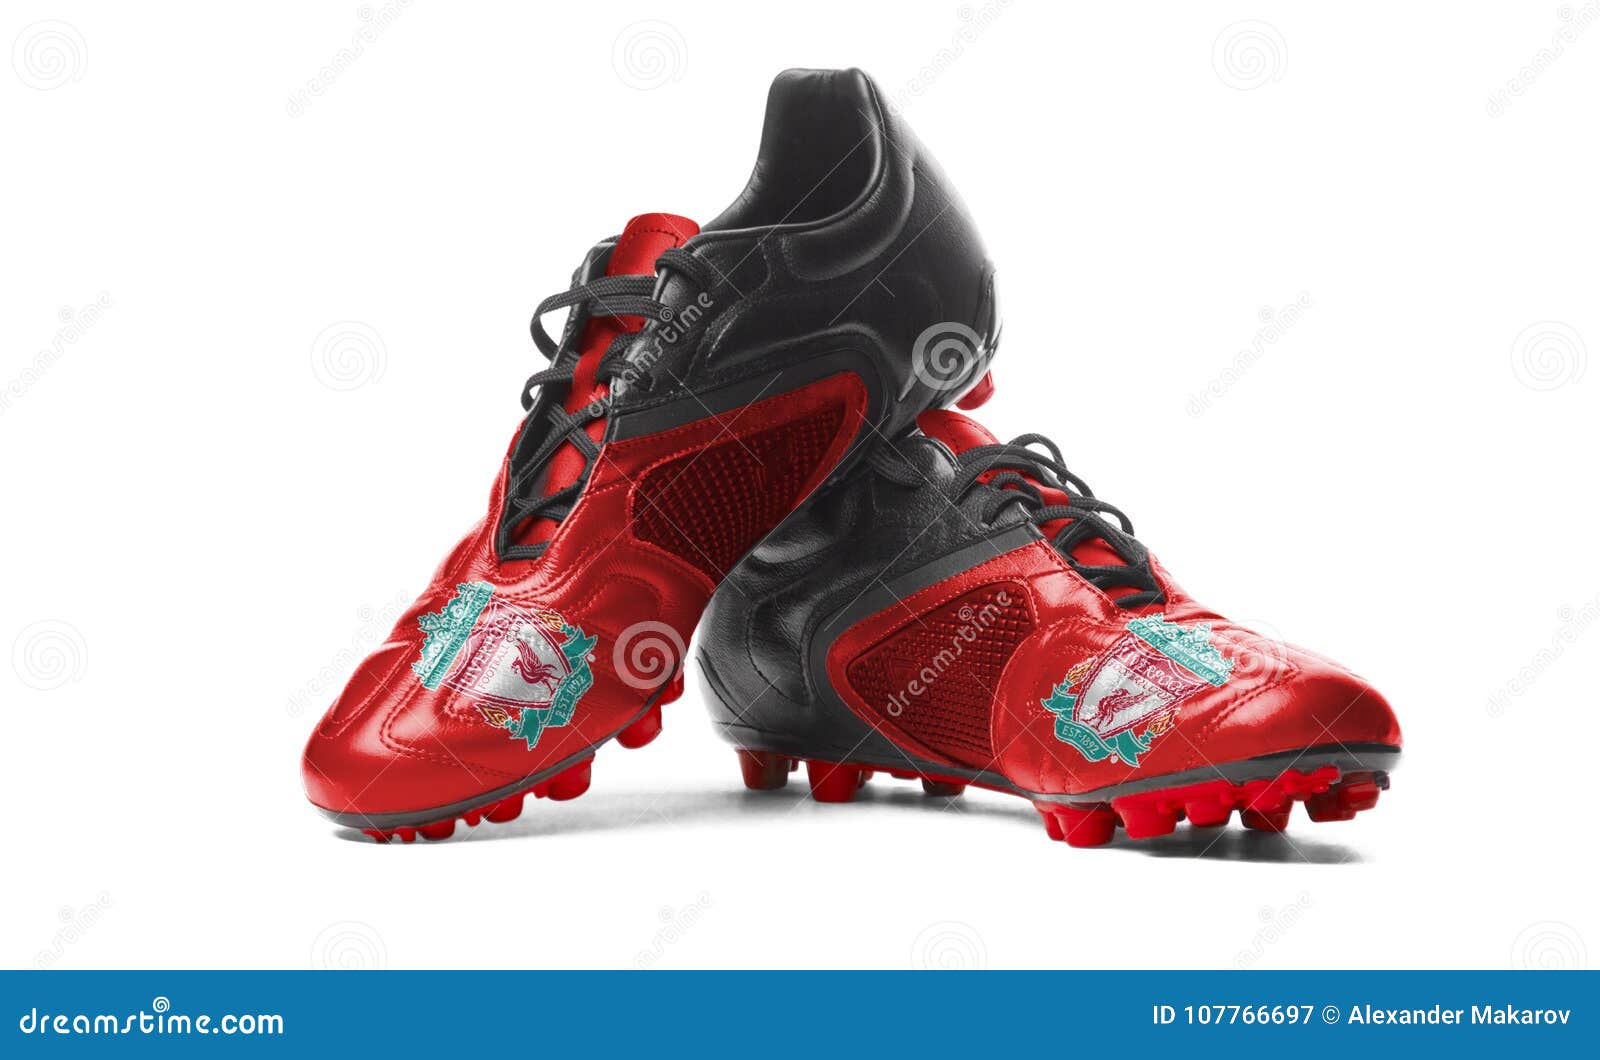 lfc football boots